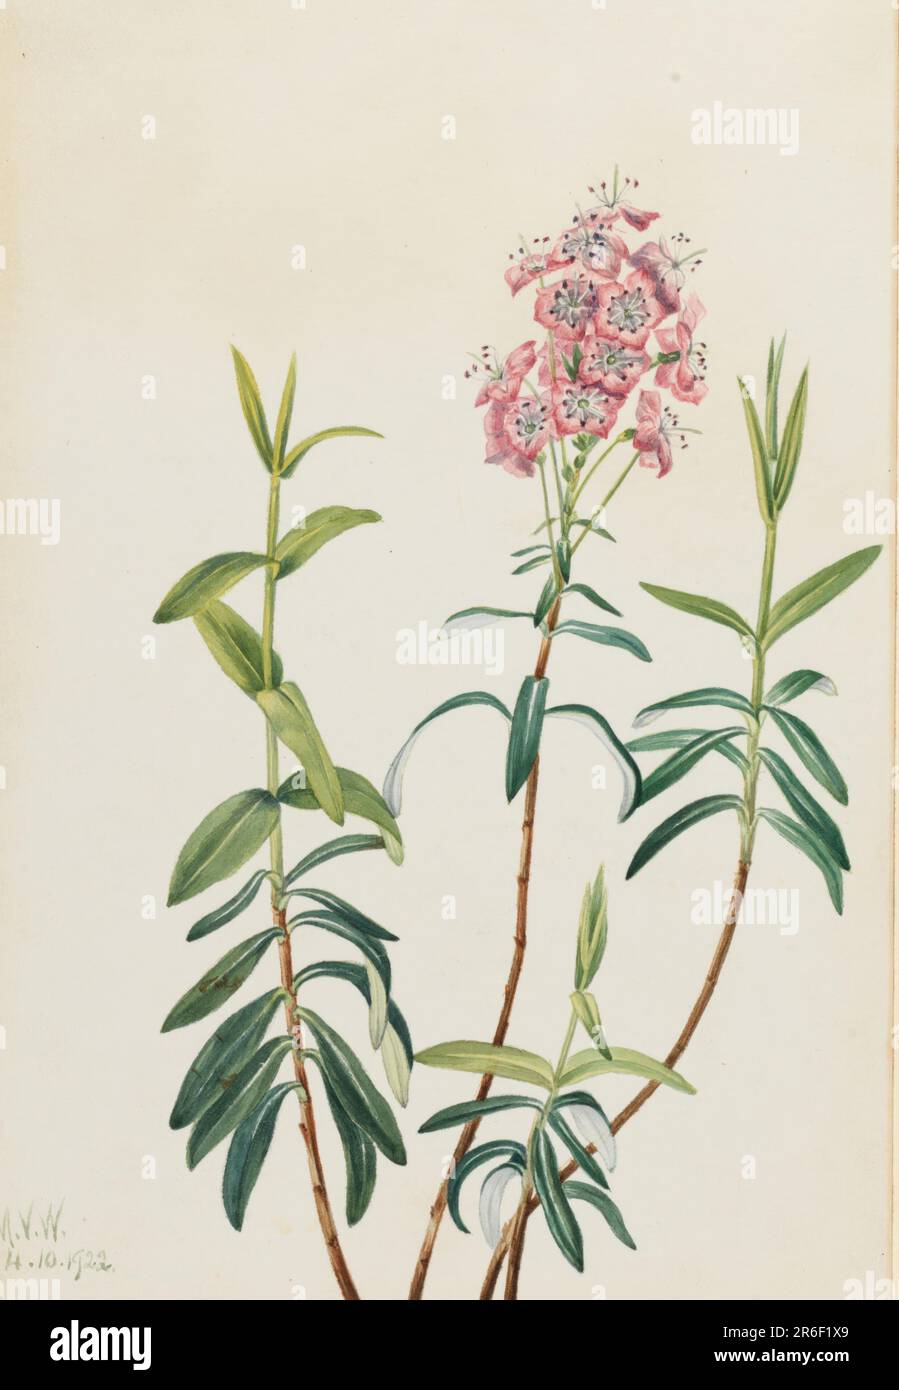 Bog Kalmia (Kalmia polifolia). Date: 1922. Watercolor on paper. Museum: Smithsonian American Art Museum. Stock Photo